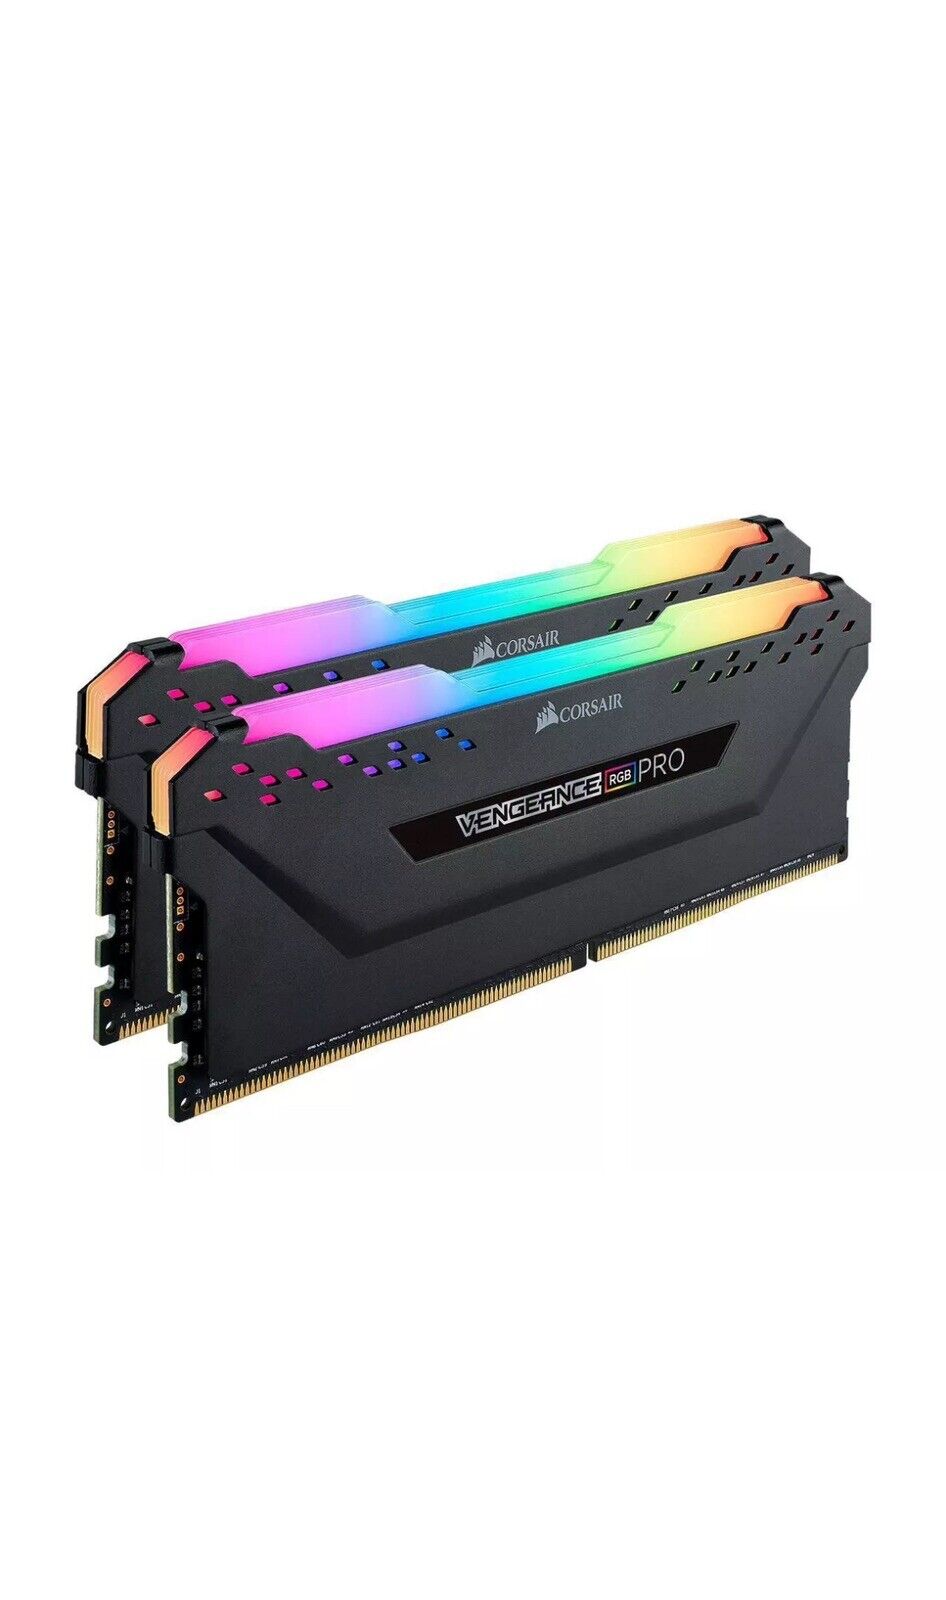 CONSAIR Vengeance RGB PRO 16GB (2PK x 8GB) 3200MHZ DDR4 C16 DIMM Desktop Memory